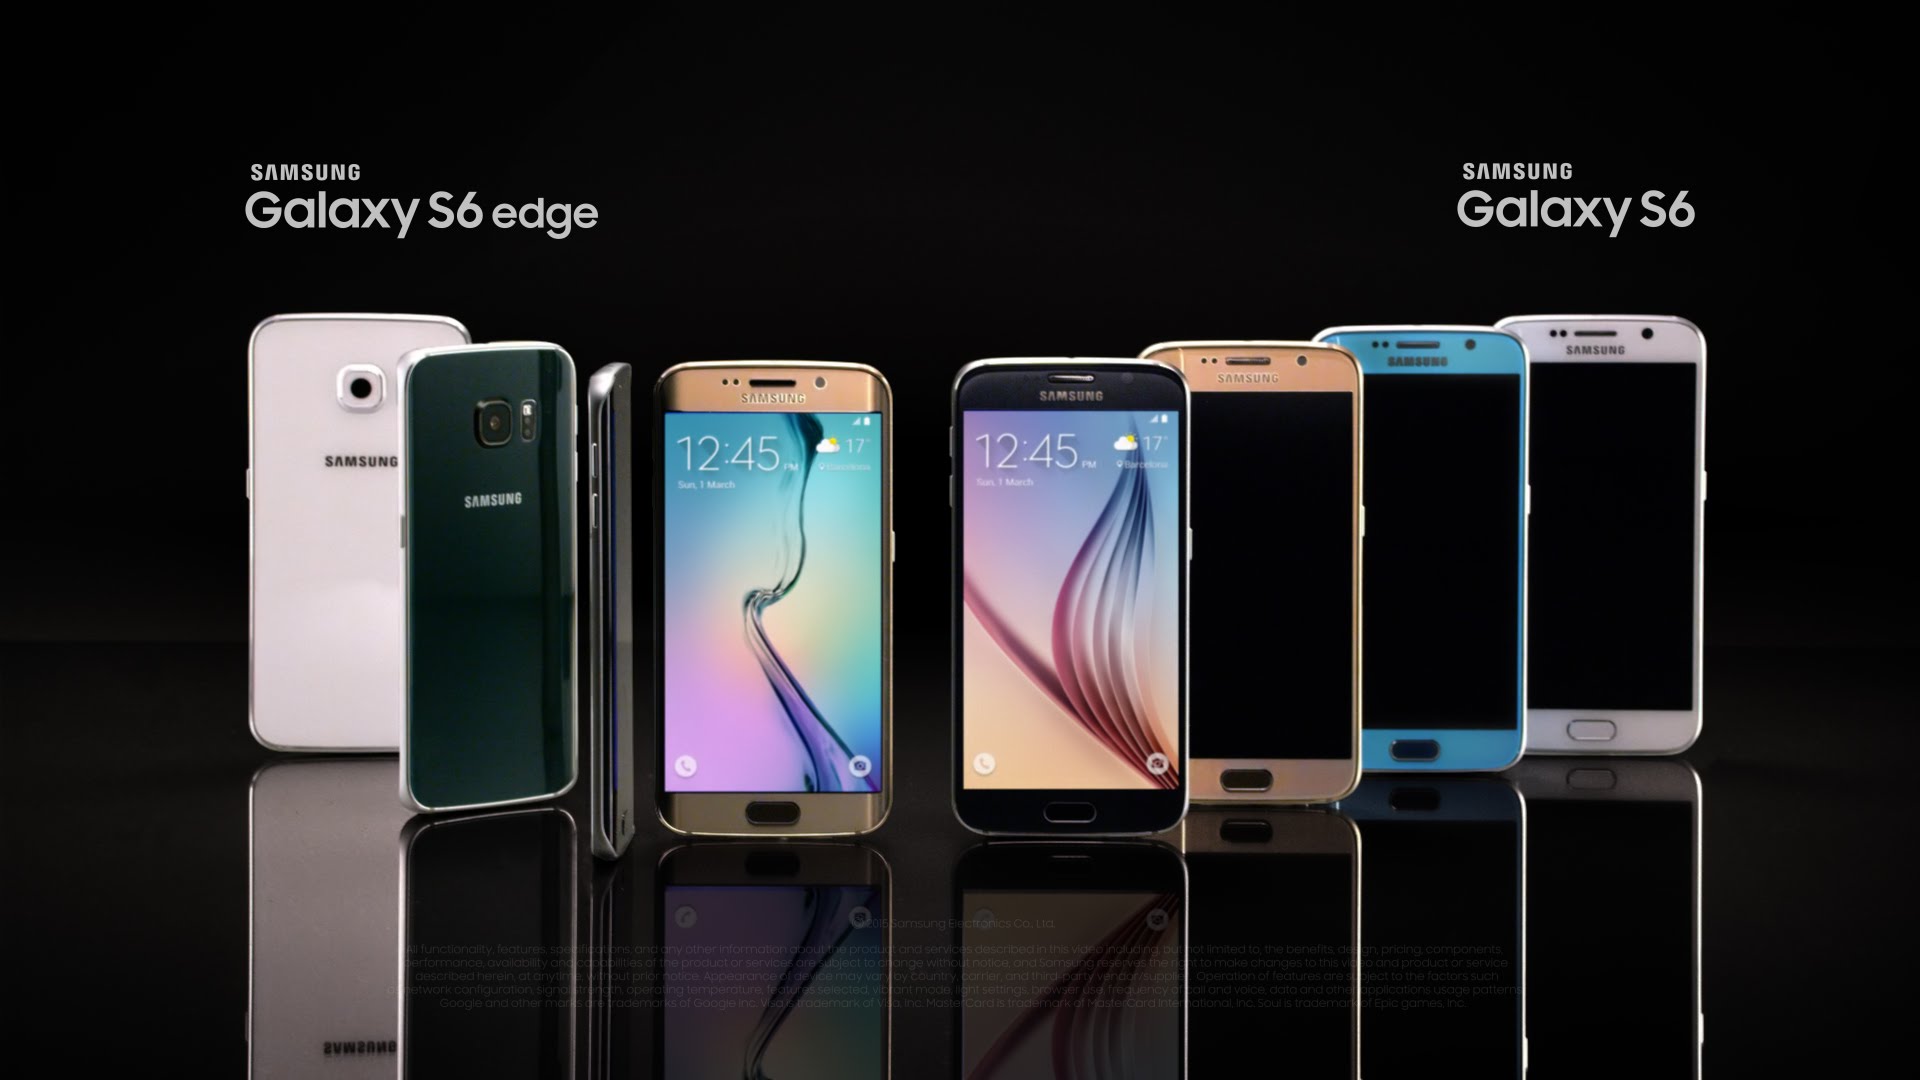 samsung galaxy s6 edge wallpaper,mobiltelefon,gadget,smartphone,kommunikationsgerät,tragbares kommunikationsgerät